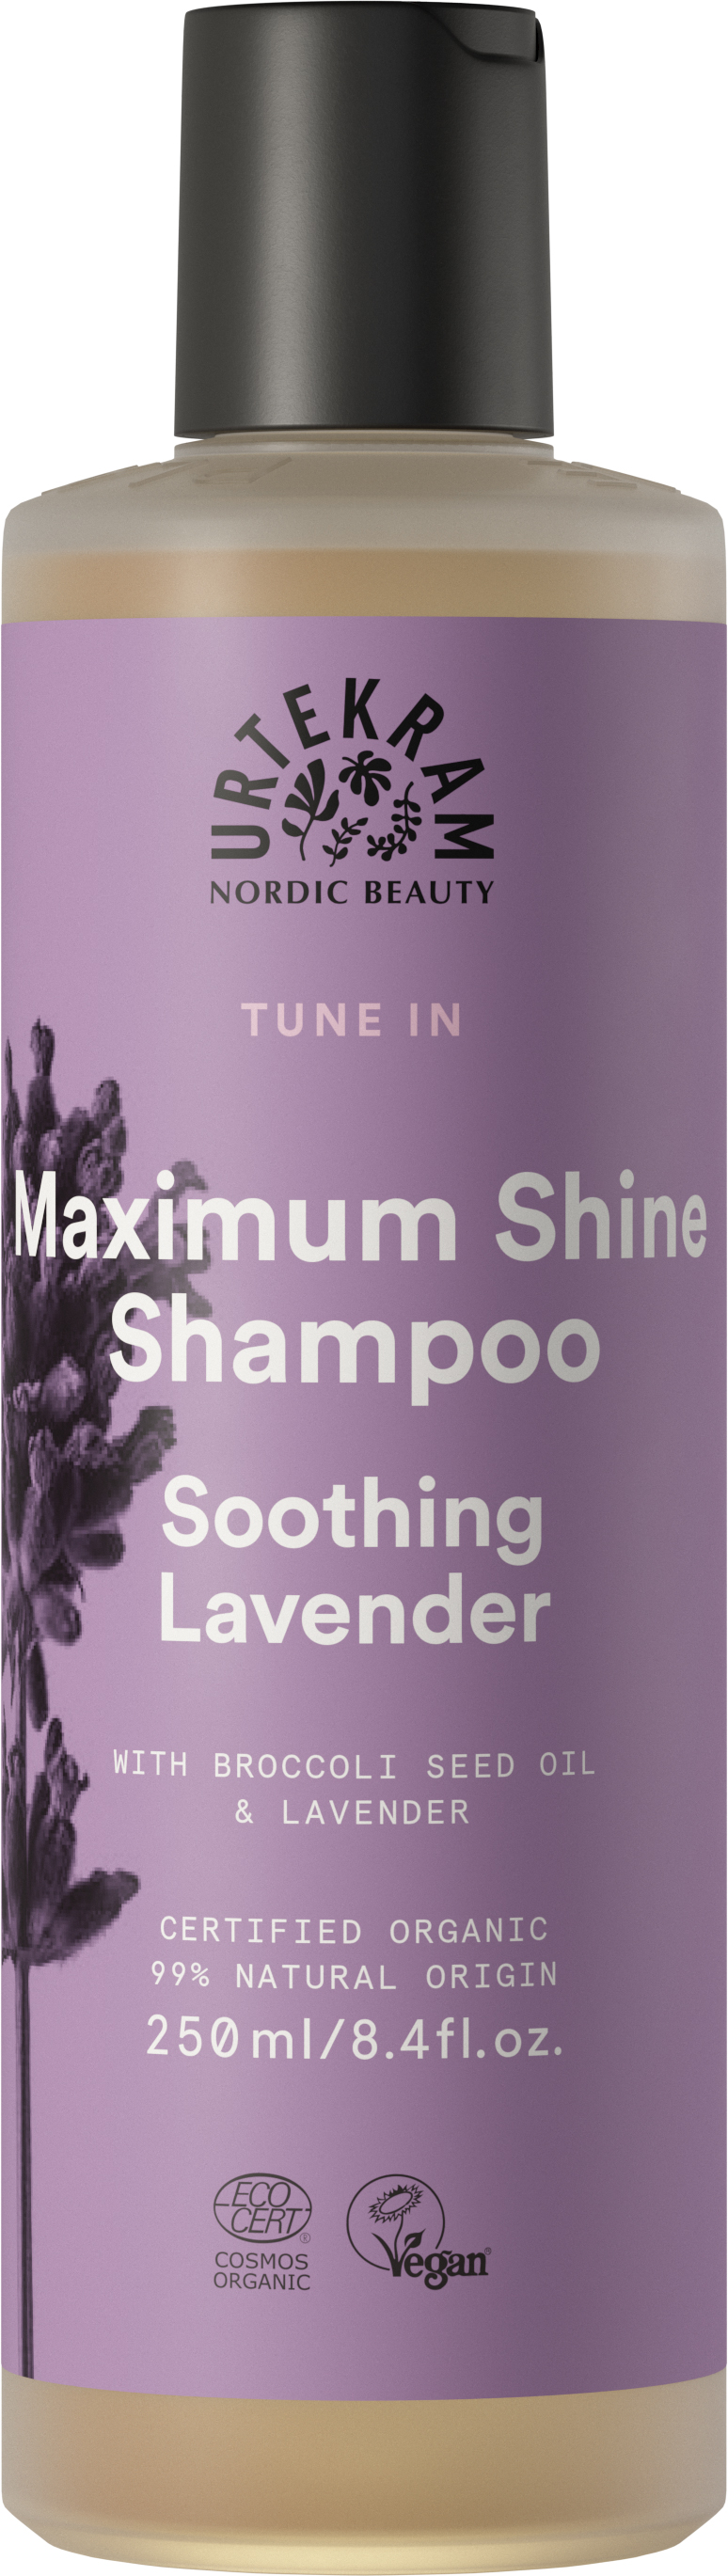 Soothing Lavender Shampoo 250 ml - Urtekram